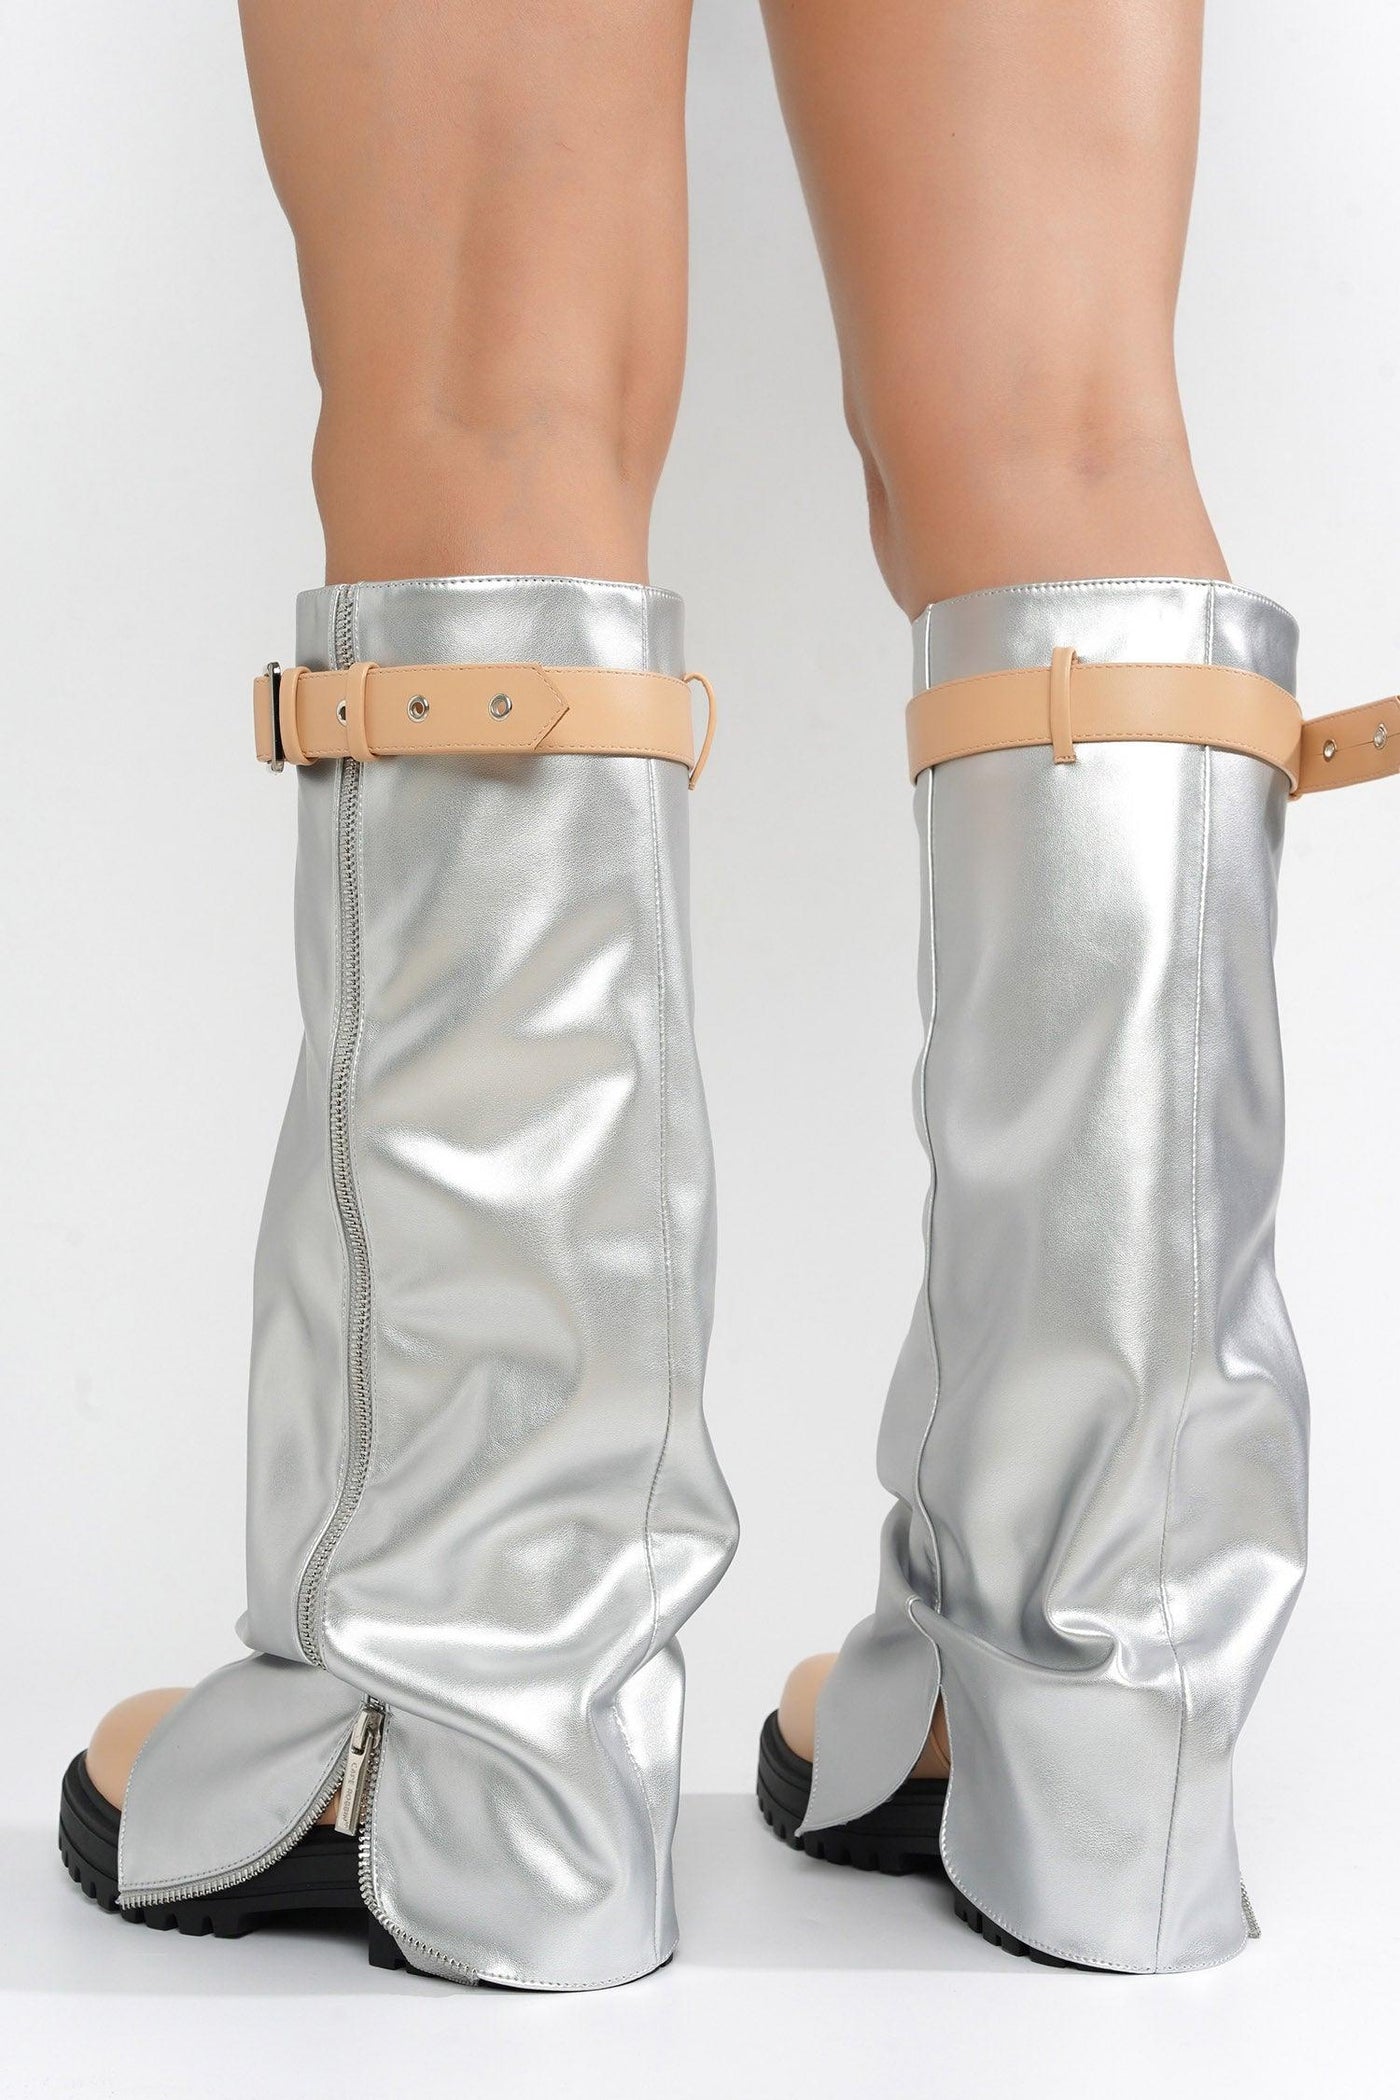 FUNAFUTI - SILVER Thigh High Boots - AMIClubwear